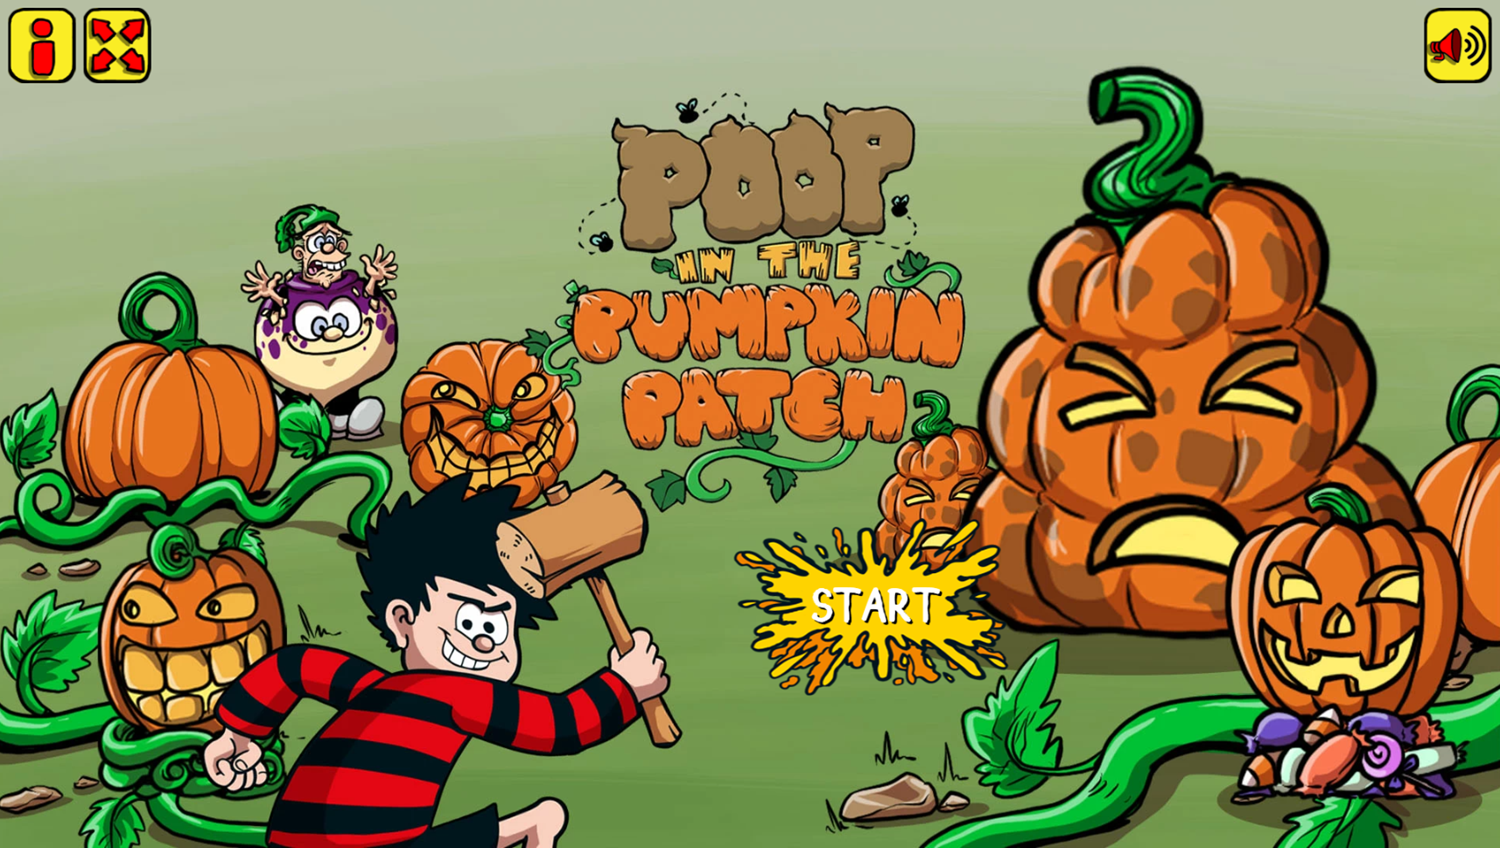 Poop in the Pumpkin Patch Game Welcome Screen Screenshot.